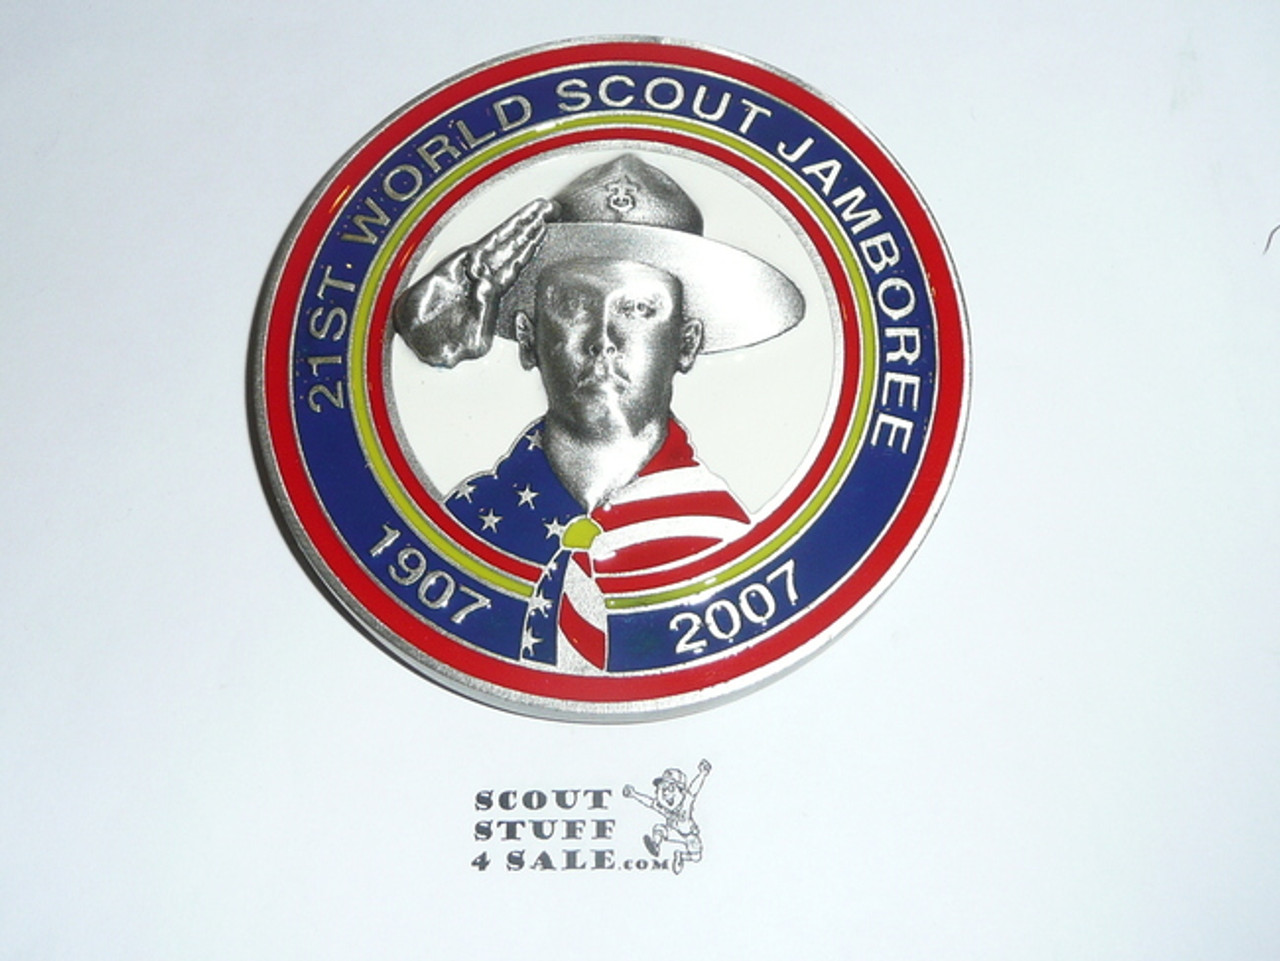 2007 Boy Scout World Jamboree USA Contingent Paper Weight